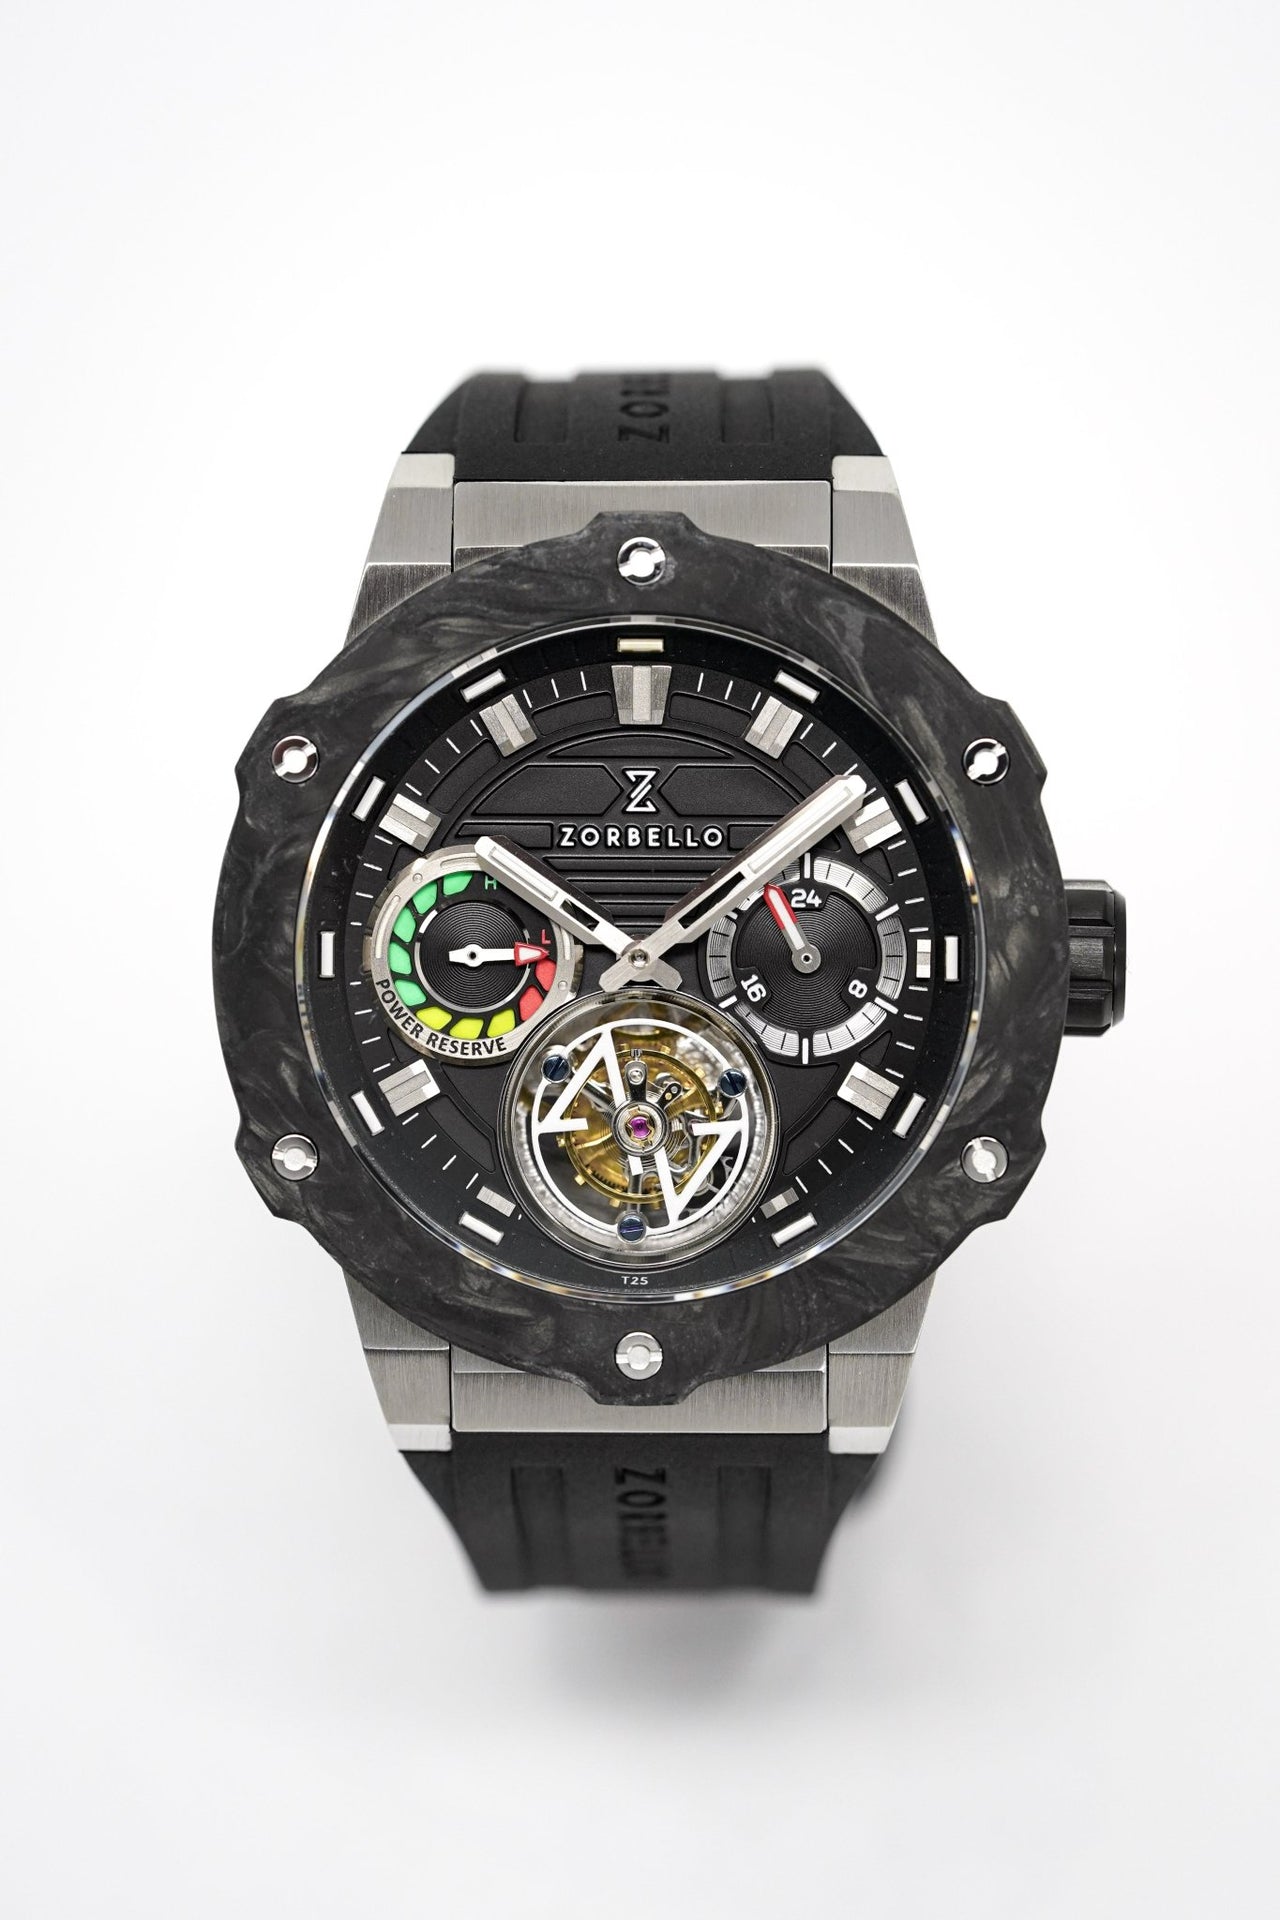 Zorbello Watch Tritium Super-Luminova® – ZBAD005 Watches Crystals Steel Tourbillon T3 